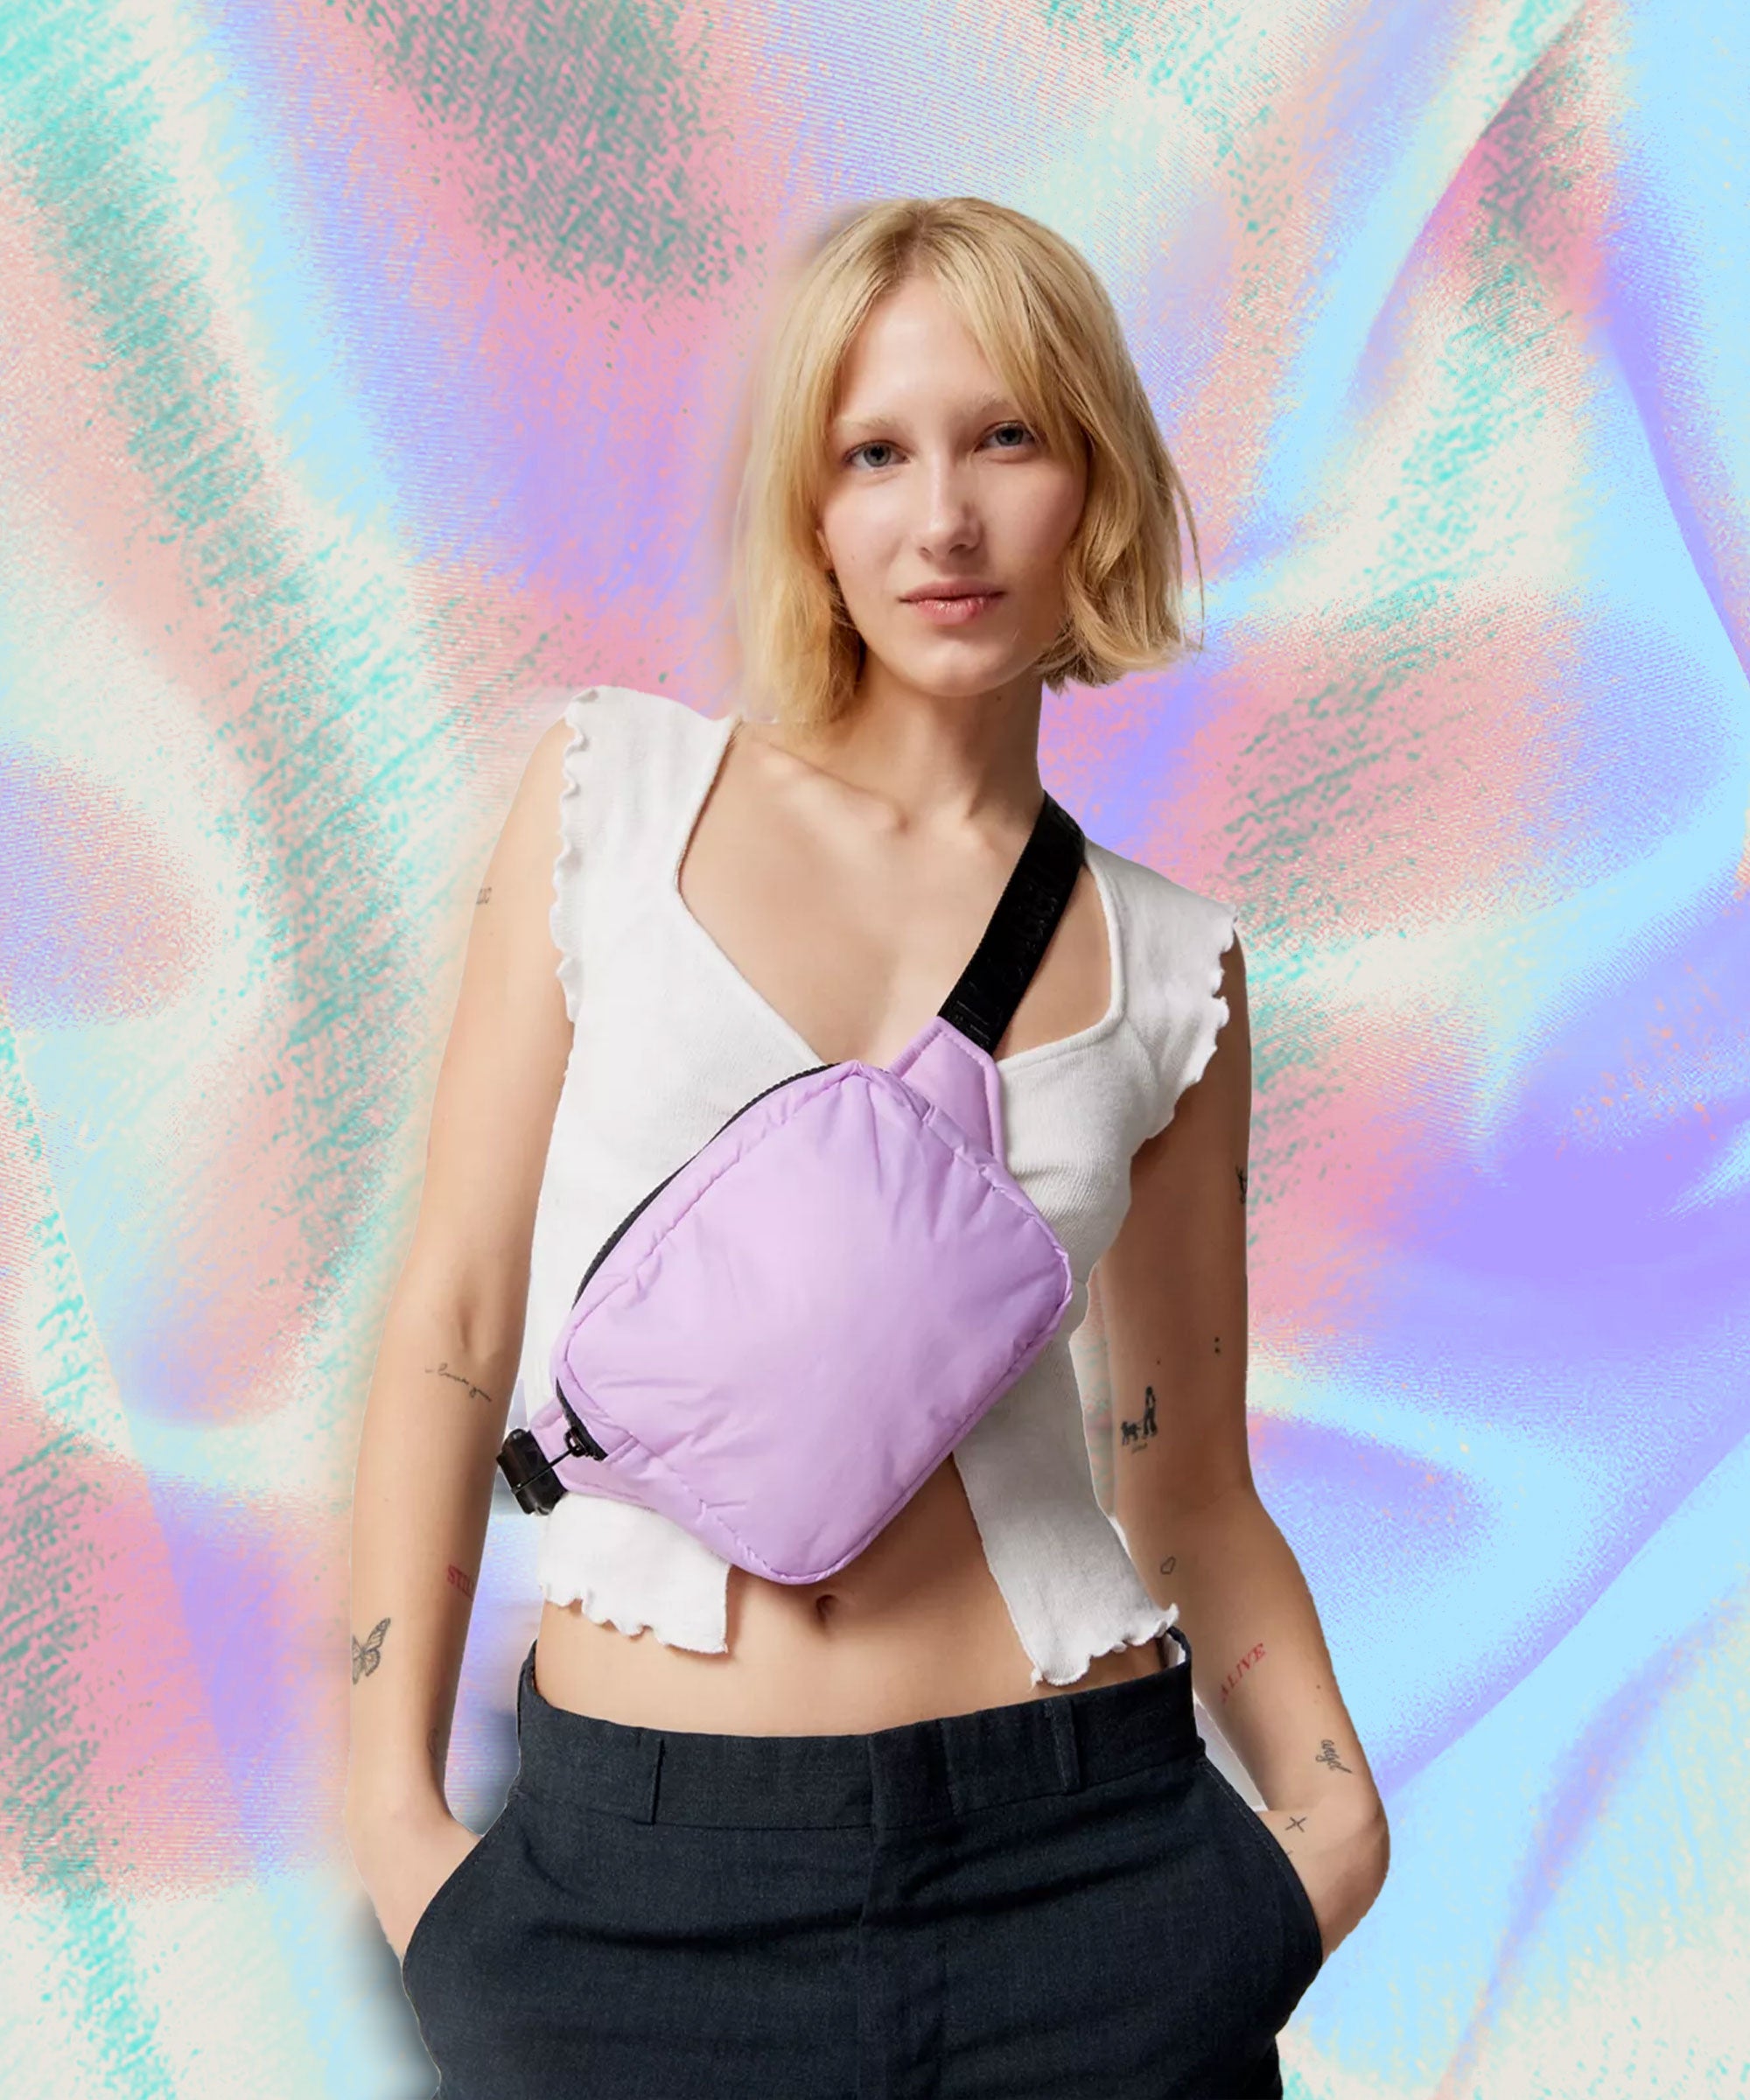  Sling Bag for Women Small Belt Chest Bum Bag Checkered waist  Fanny Pack Crossbody for women Designer-Perfect for On-the-Go Style (White  1)